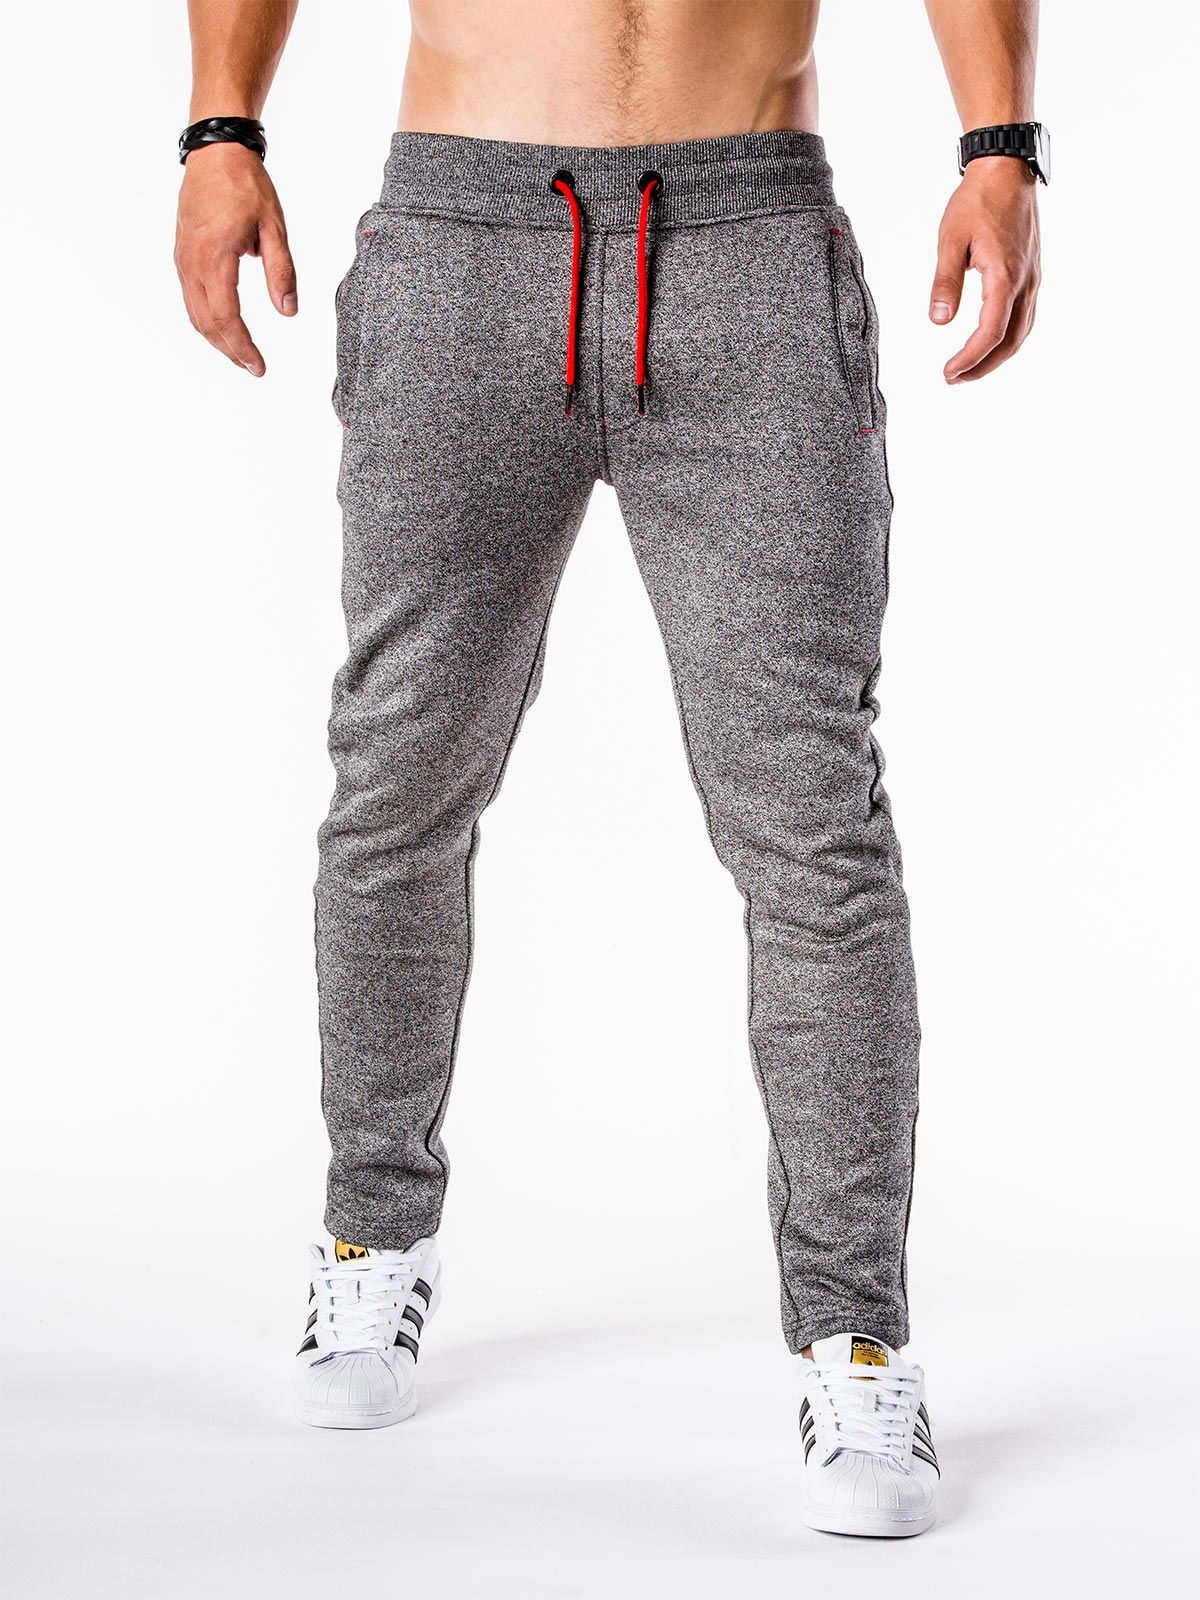 Men's sweatpants P550 - dark grey | MODONE wholesale - Clothing For Men